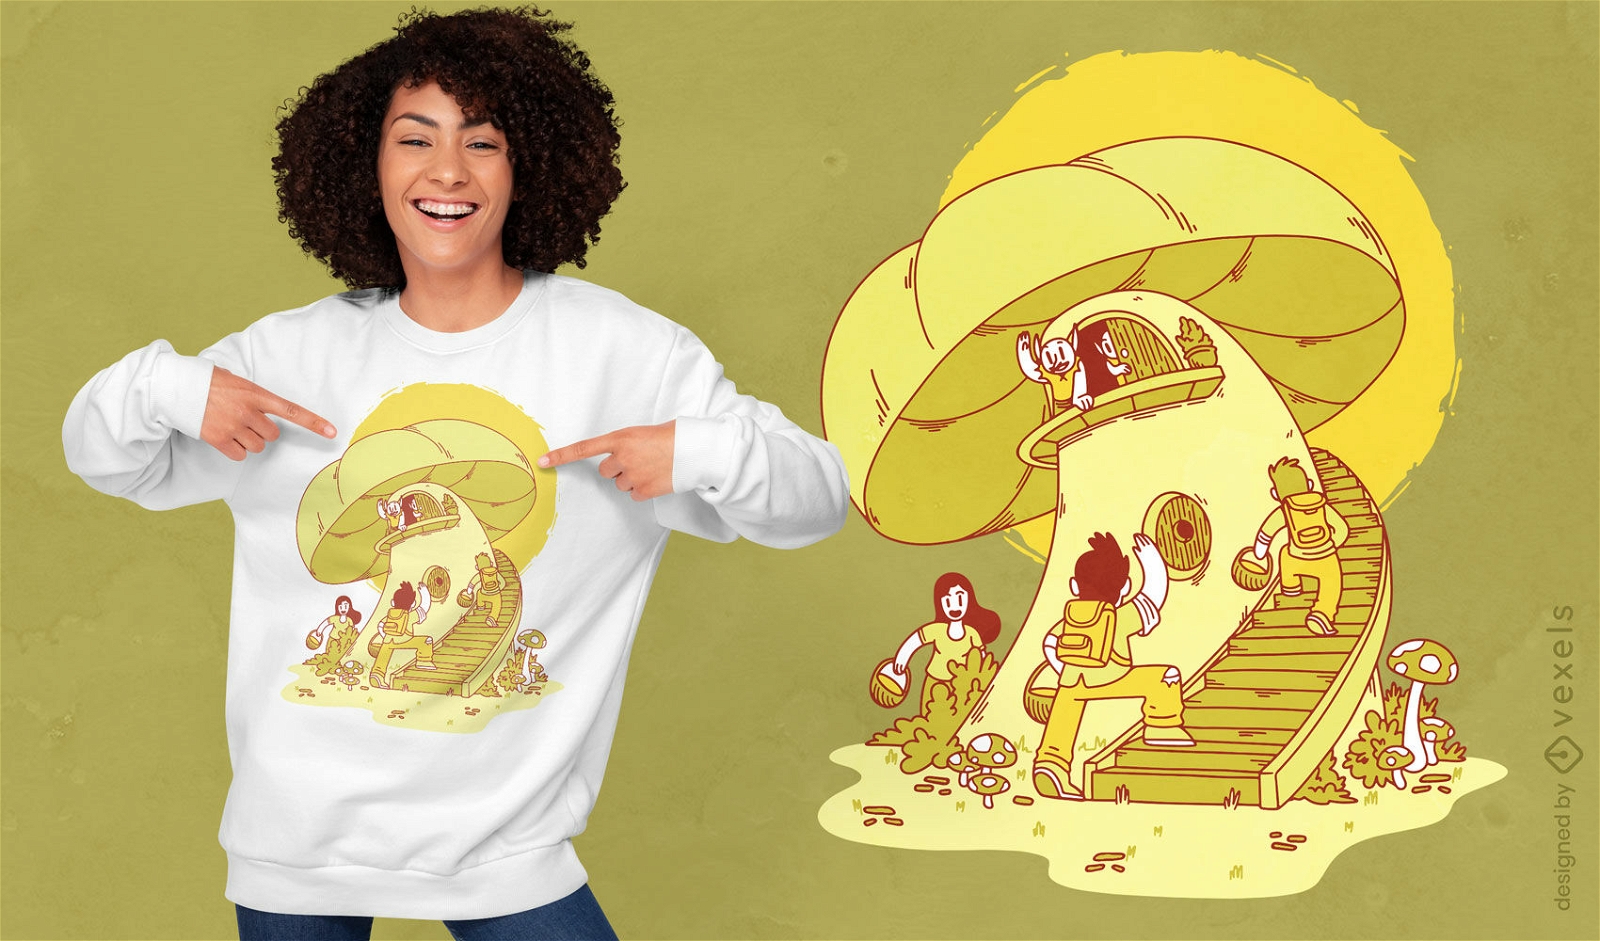 Fantasy mushroom house t-shirt design